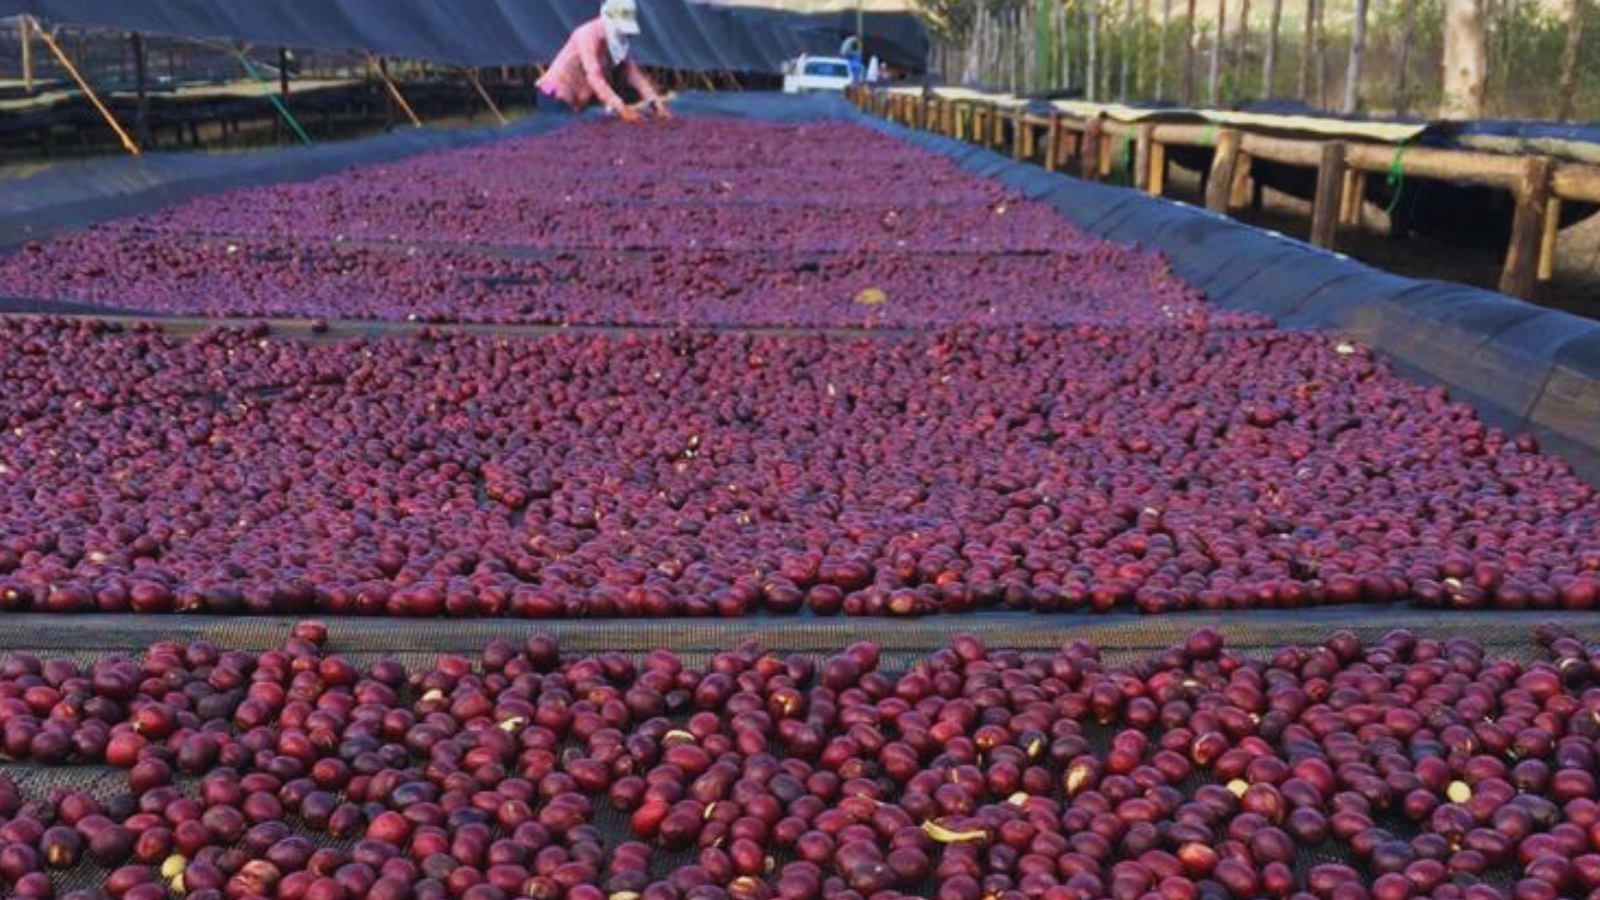 Coffee cherries drying on raised beds in Nicaragua